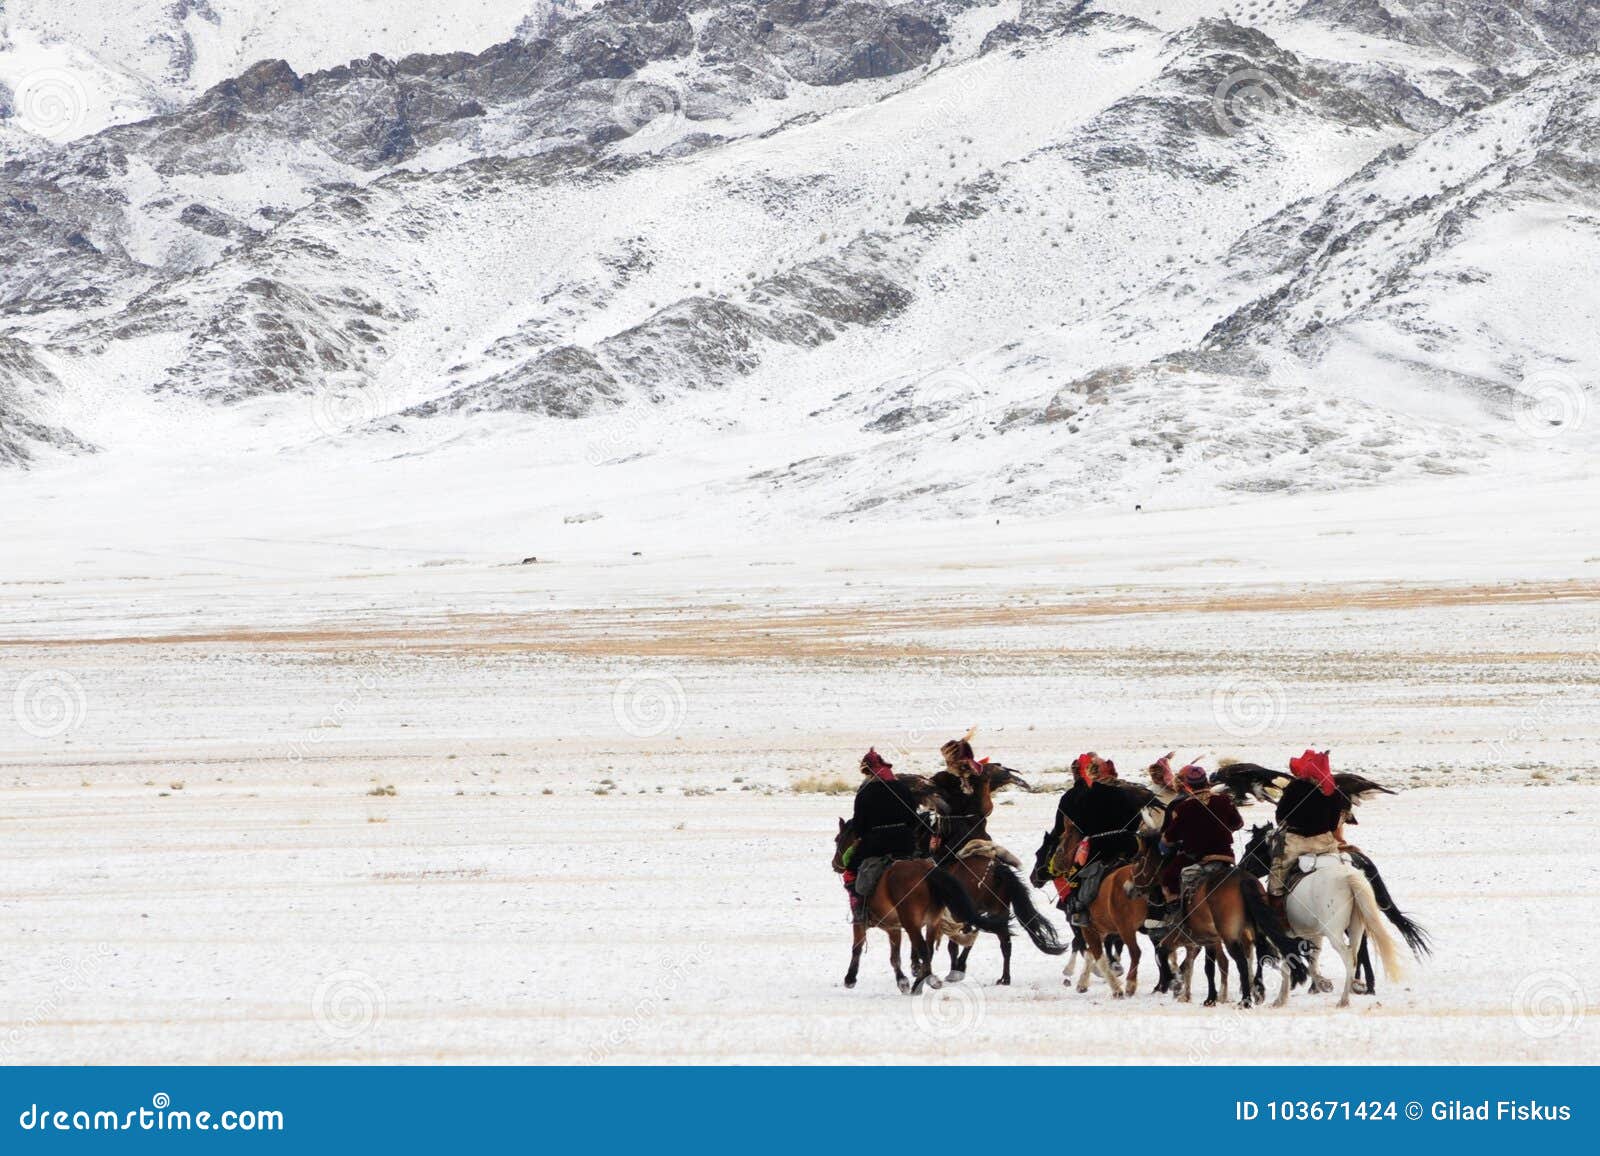 golden eagle festival in winter snowy mongolia